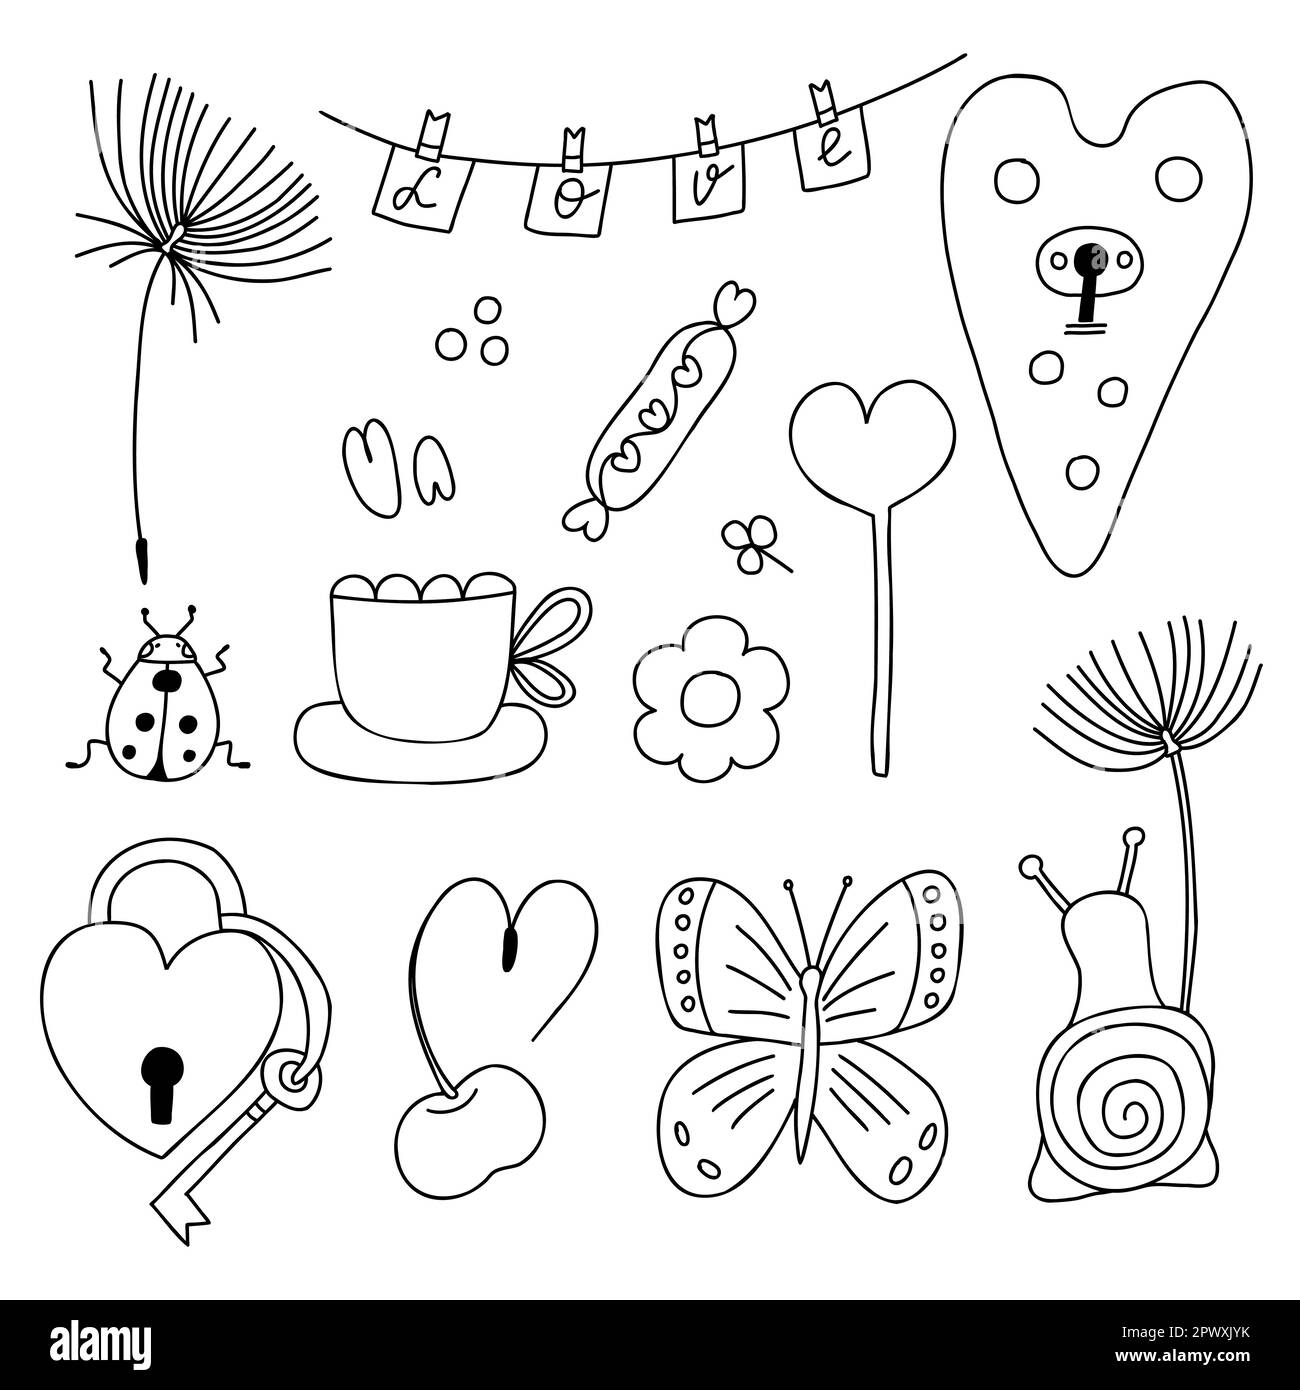 Set of hand drawn elements cute doodle art Vector Image